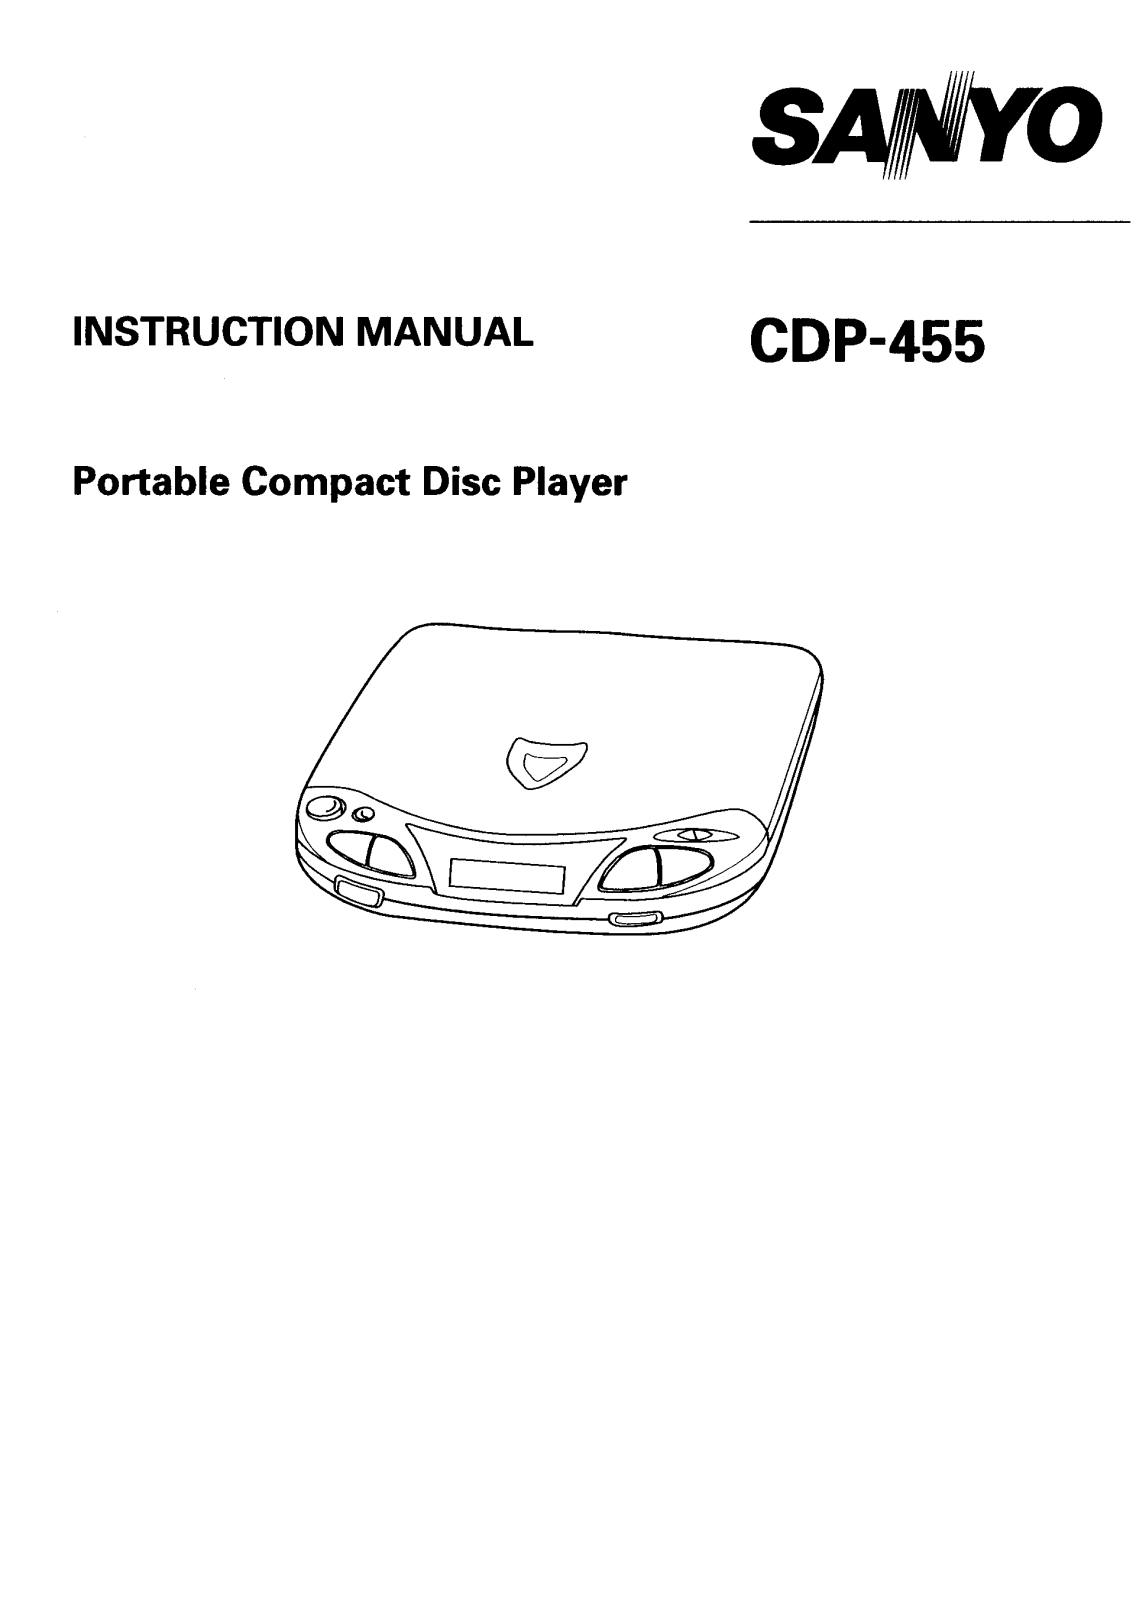 Sanyo CDP-455 Instruction Manual